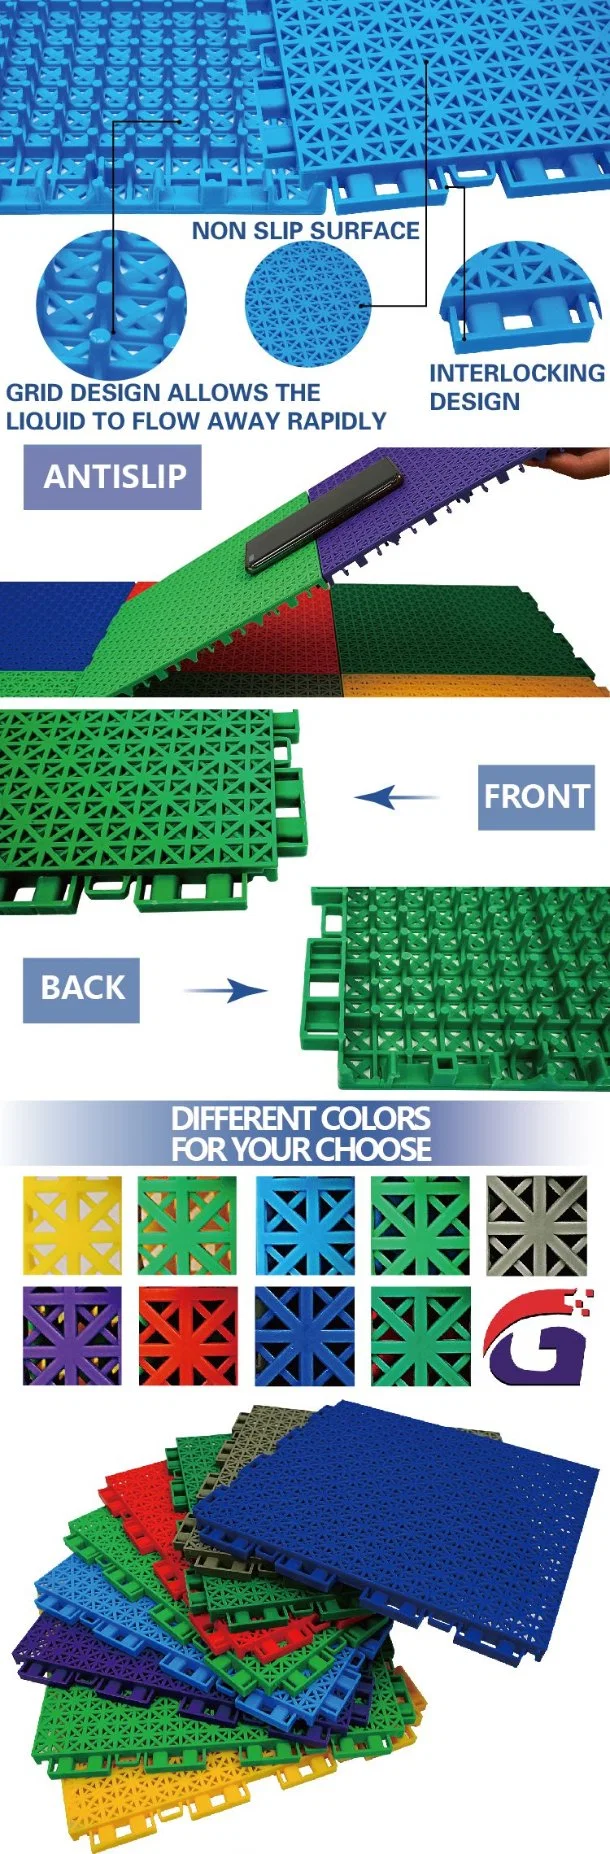 Wholesale Eco-Friendly Plastic Interlocking Garage Floor Tiles/Removable PP Interlocking Floor Mats for Car Washing